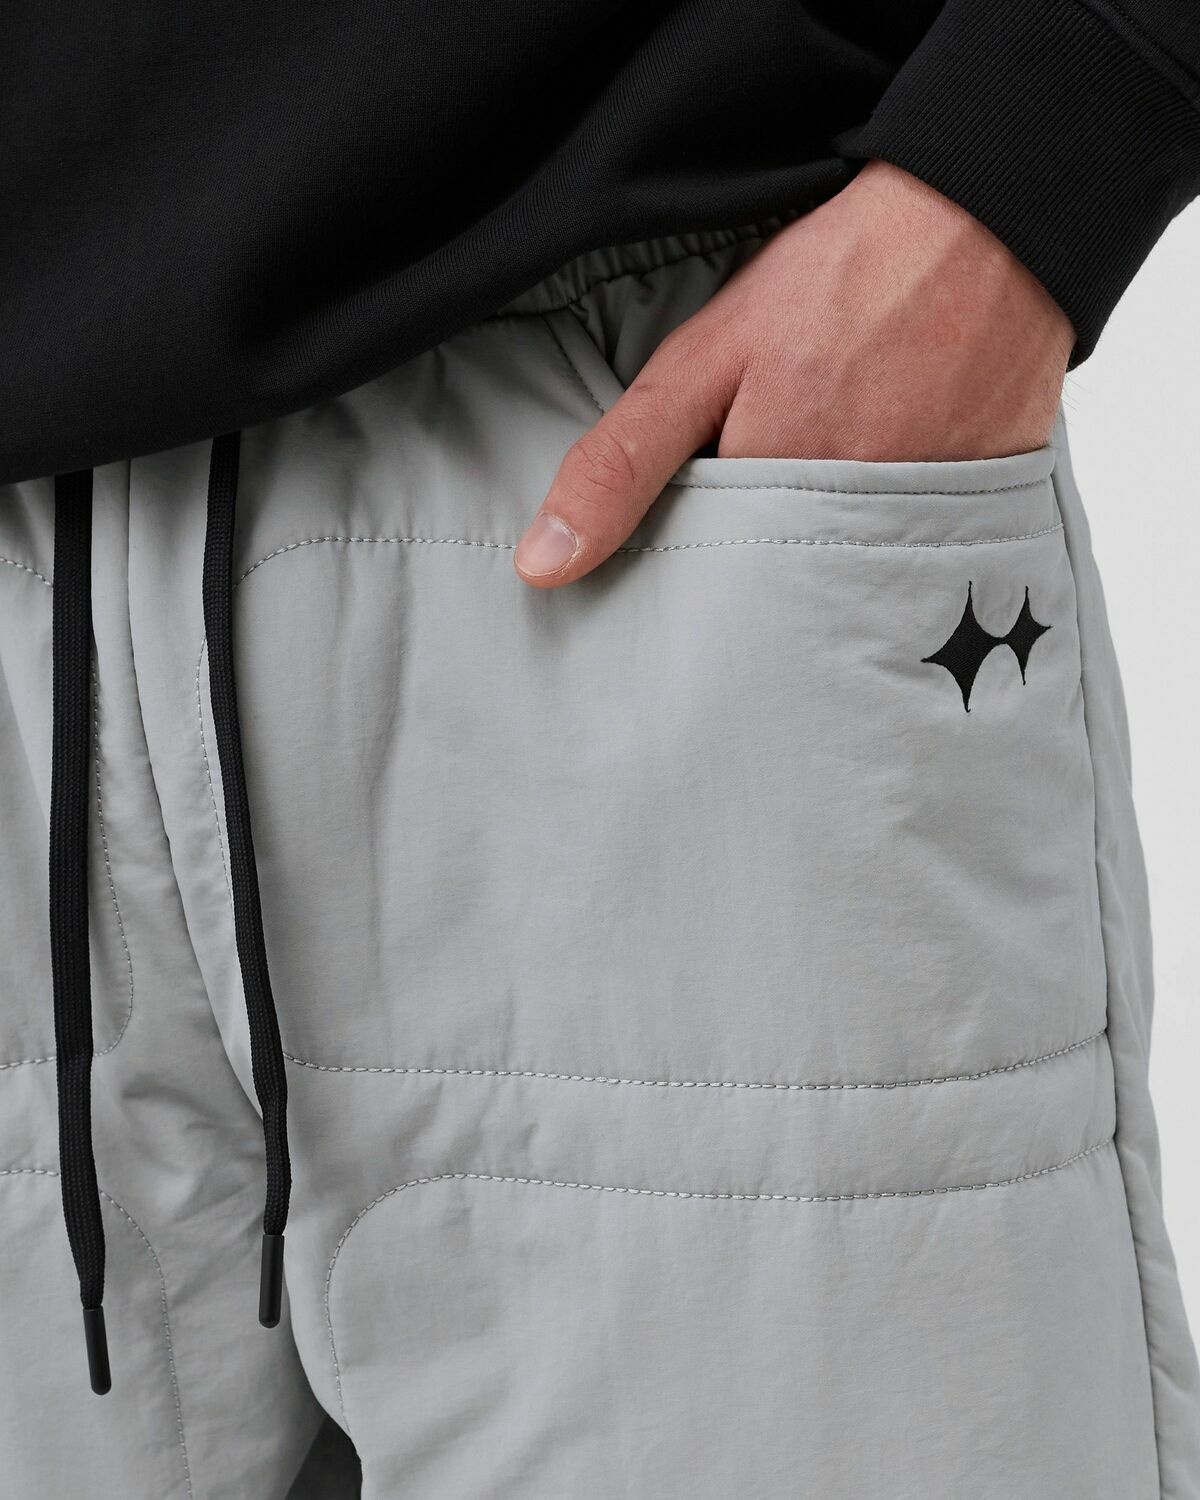 Bstn Brand Padded Pants Grey - Mens - Casual Pants